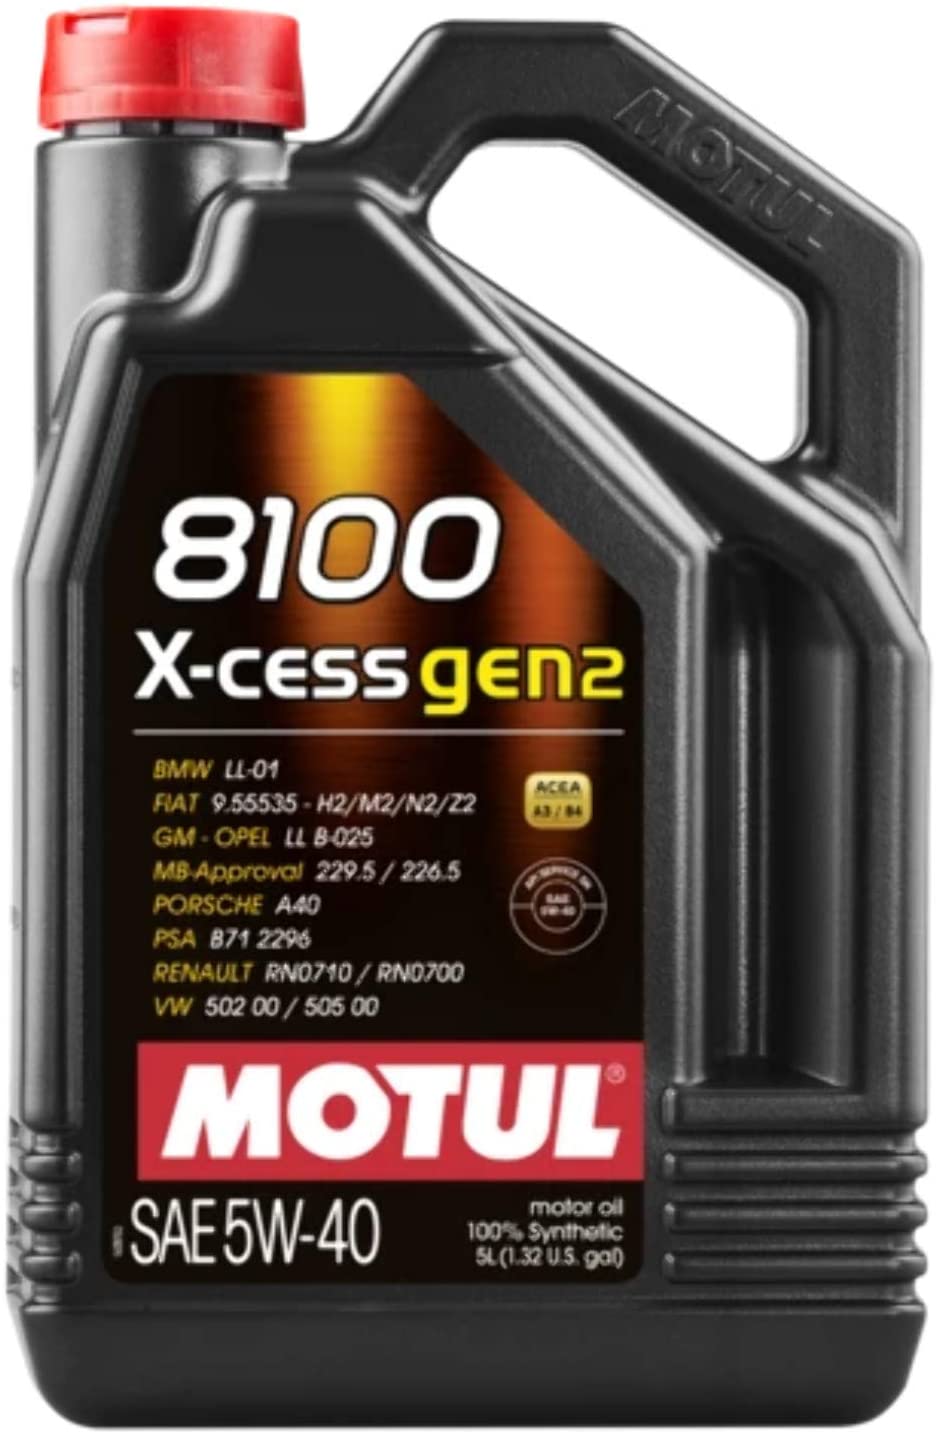 Motul, Buy Motul 8100 X-cess 5W40 Engine Oil 5L